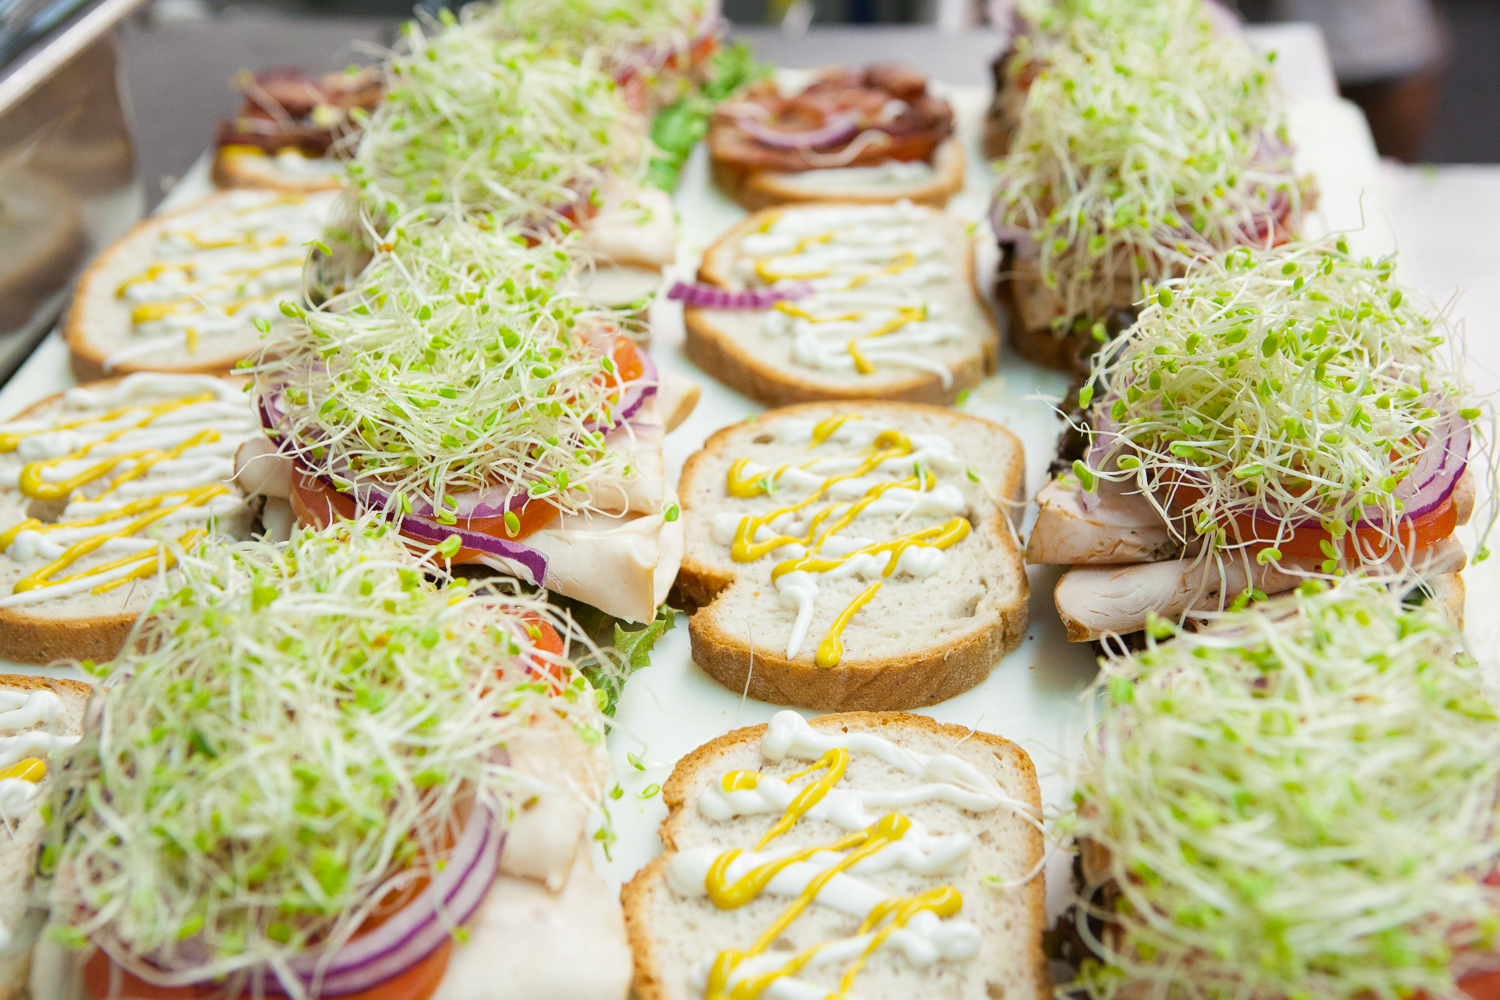 fresh-organic-sandwiches-prepared-by-mana-foods-deli copy.jpg